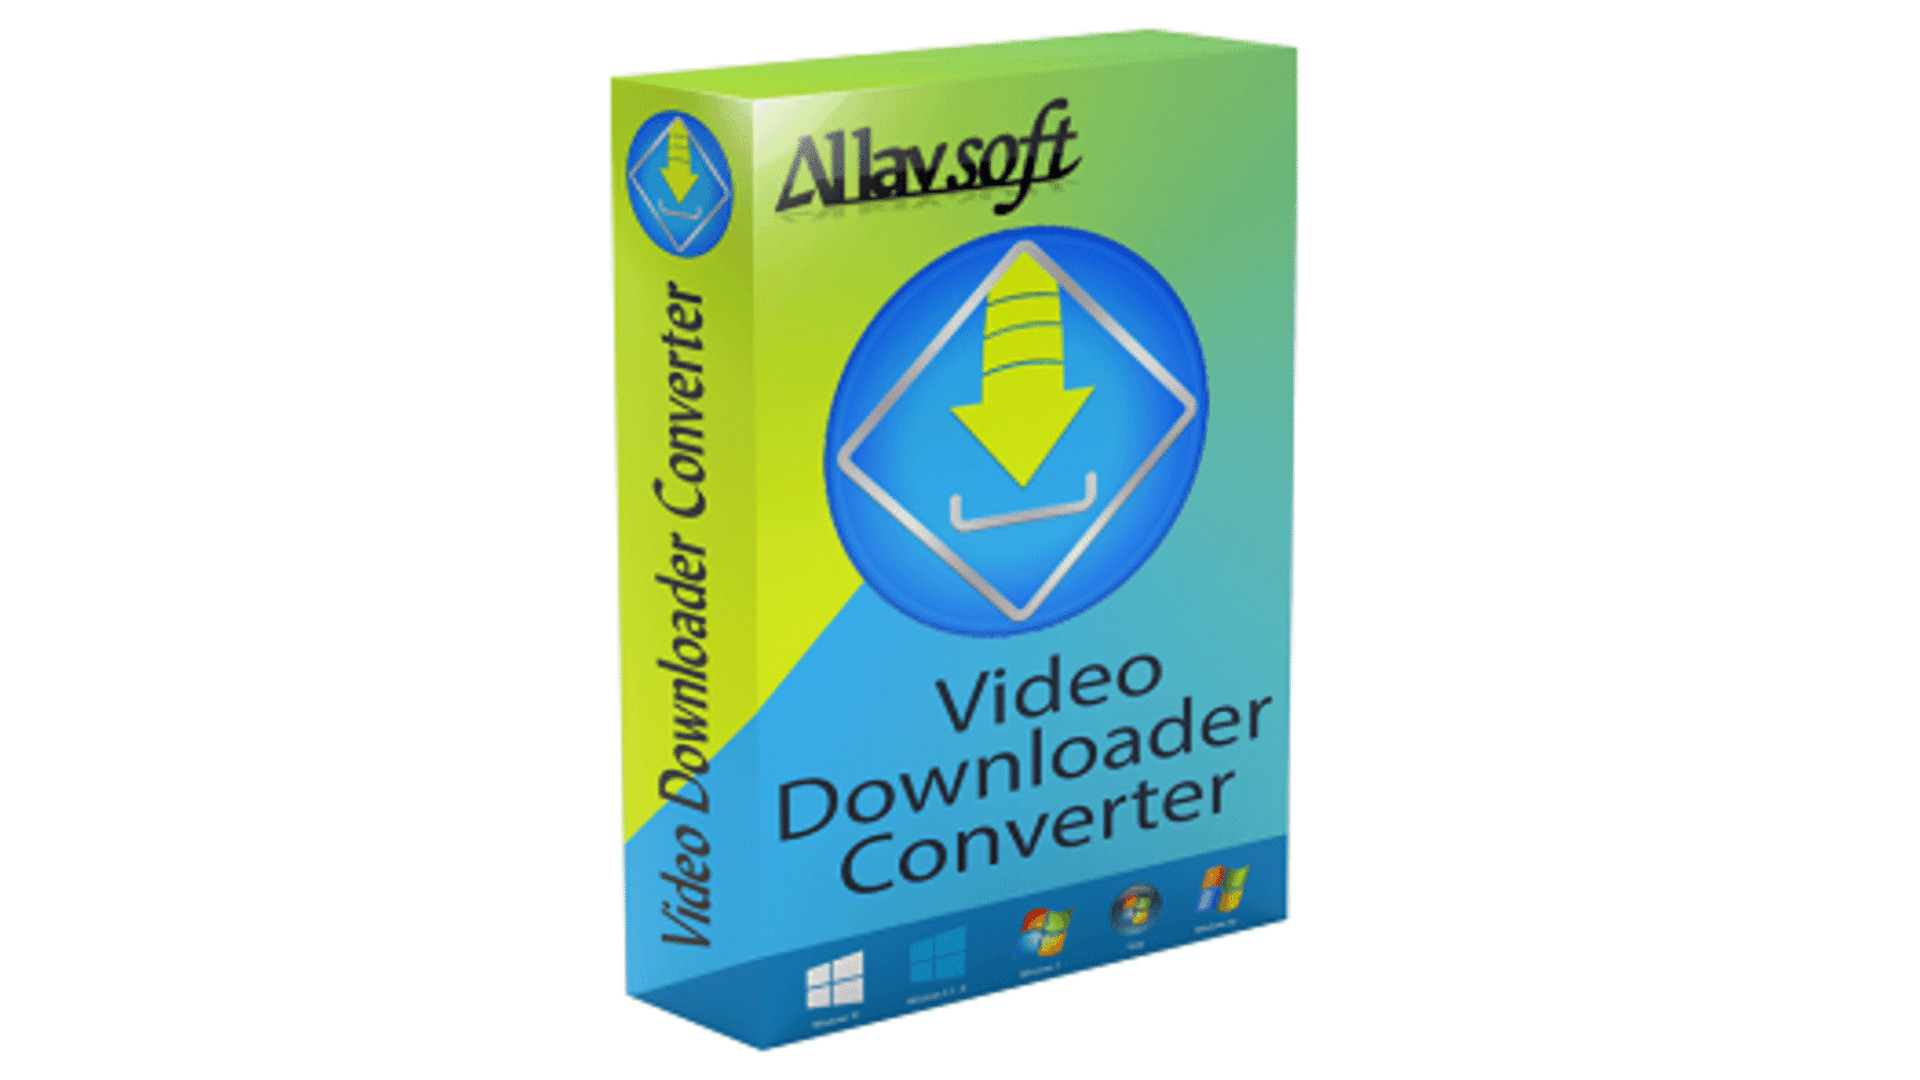 Allavsoft Video Downloader and Converter for Windows CD Key (2.75$)